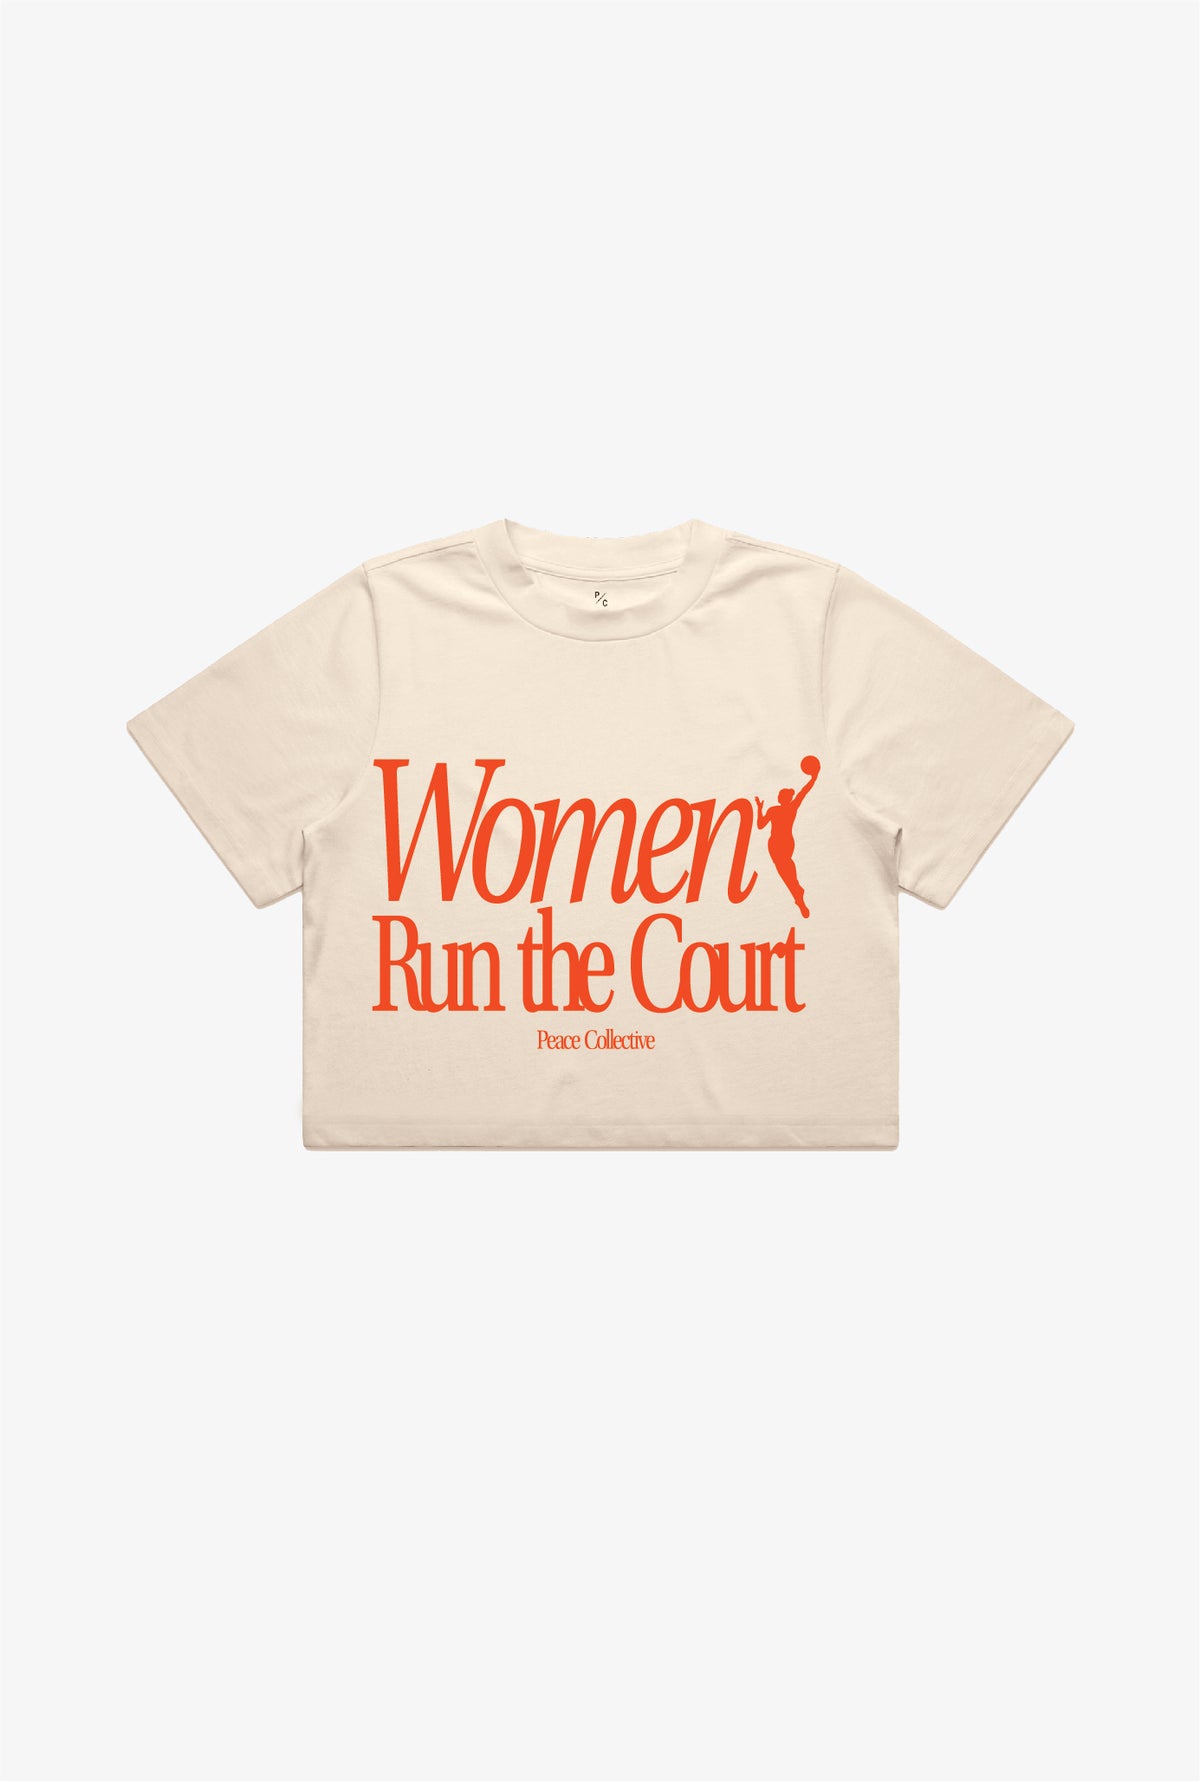 Women Run the Court Cropped Shirt - Ivory